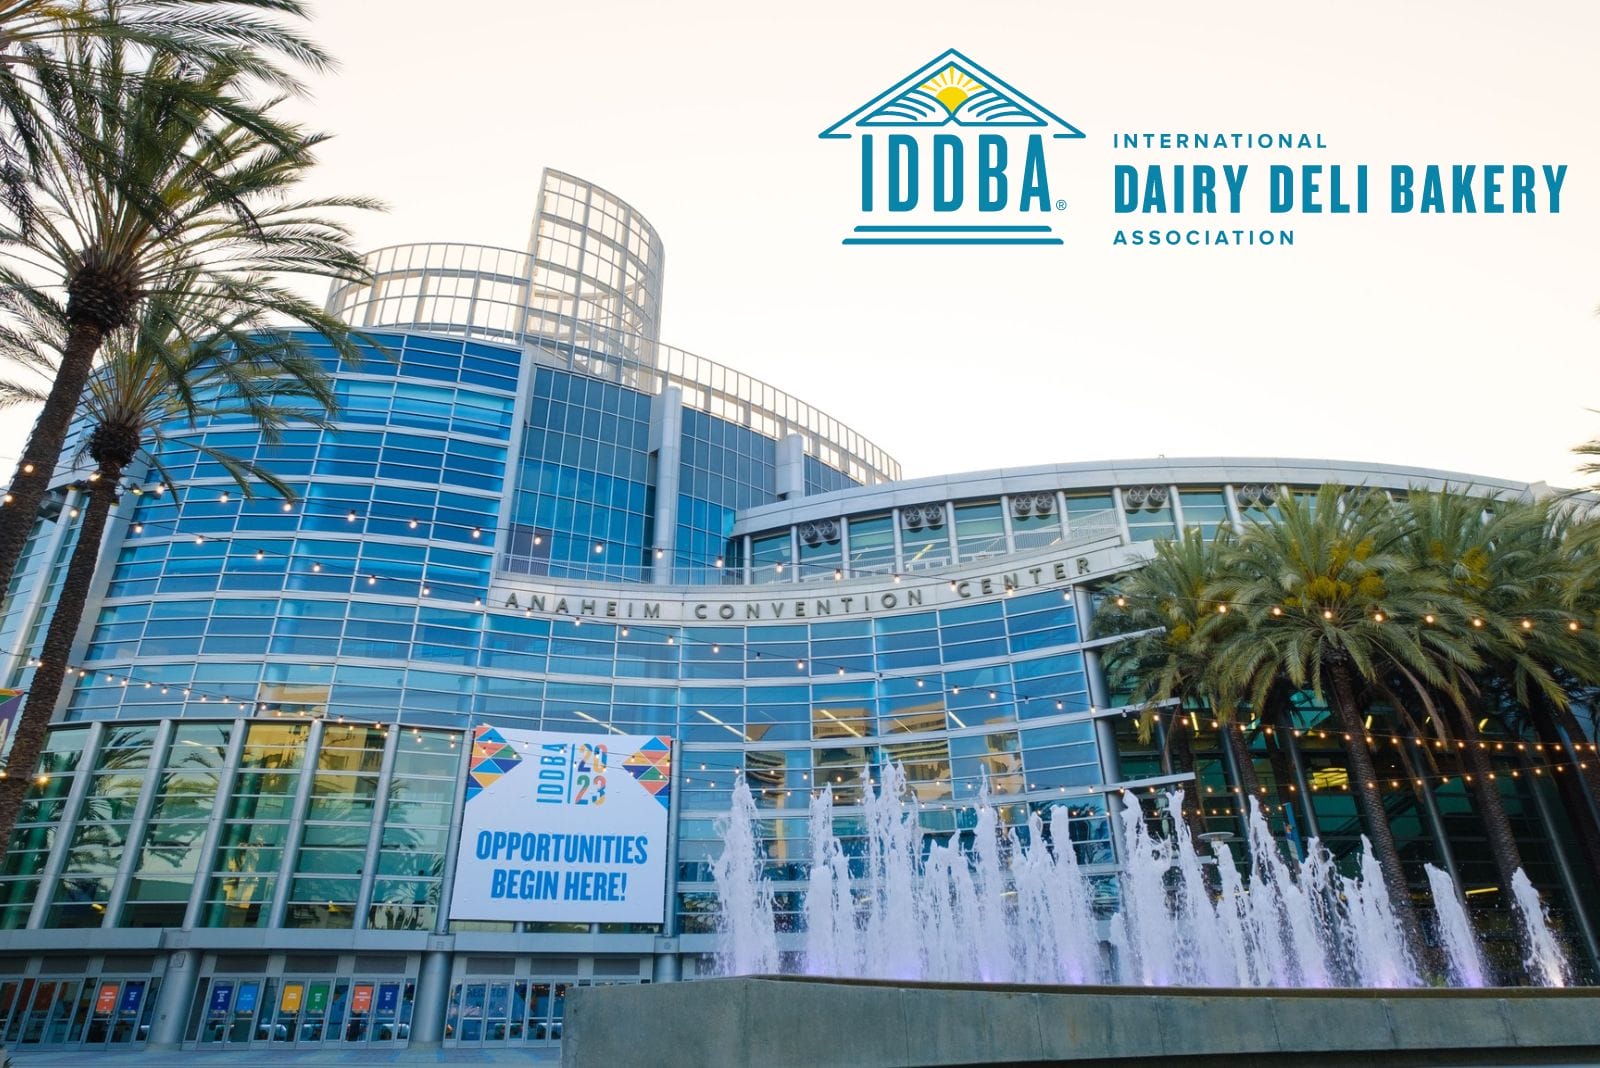 Anaheim Convention Center with IDDBA logo on it